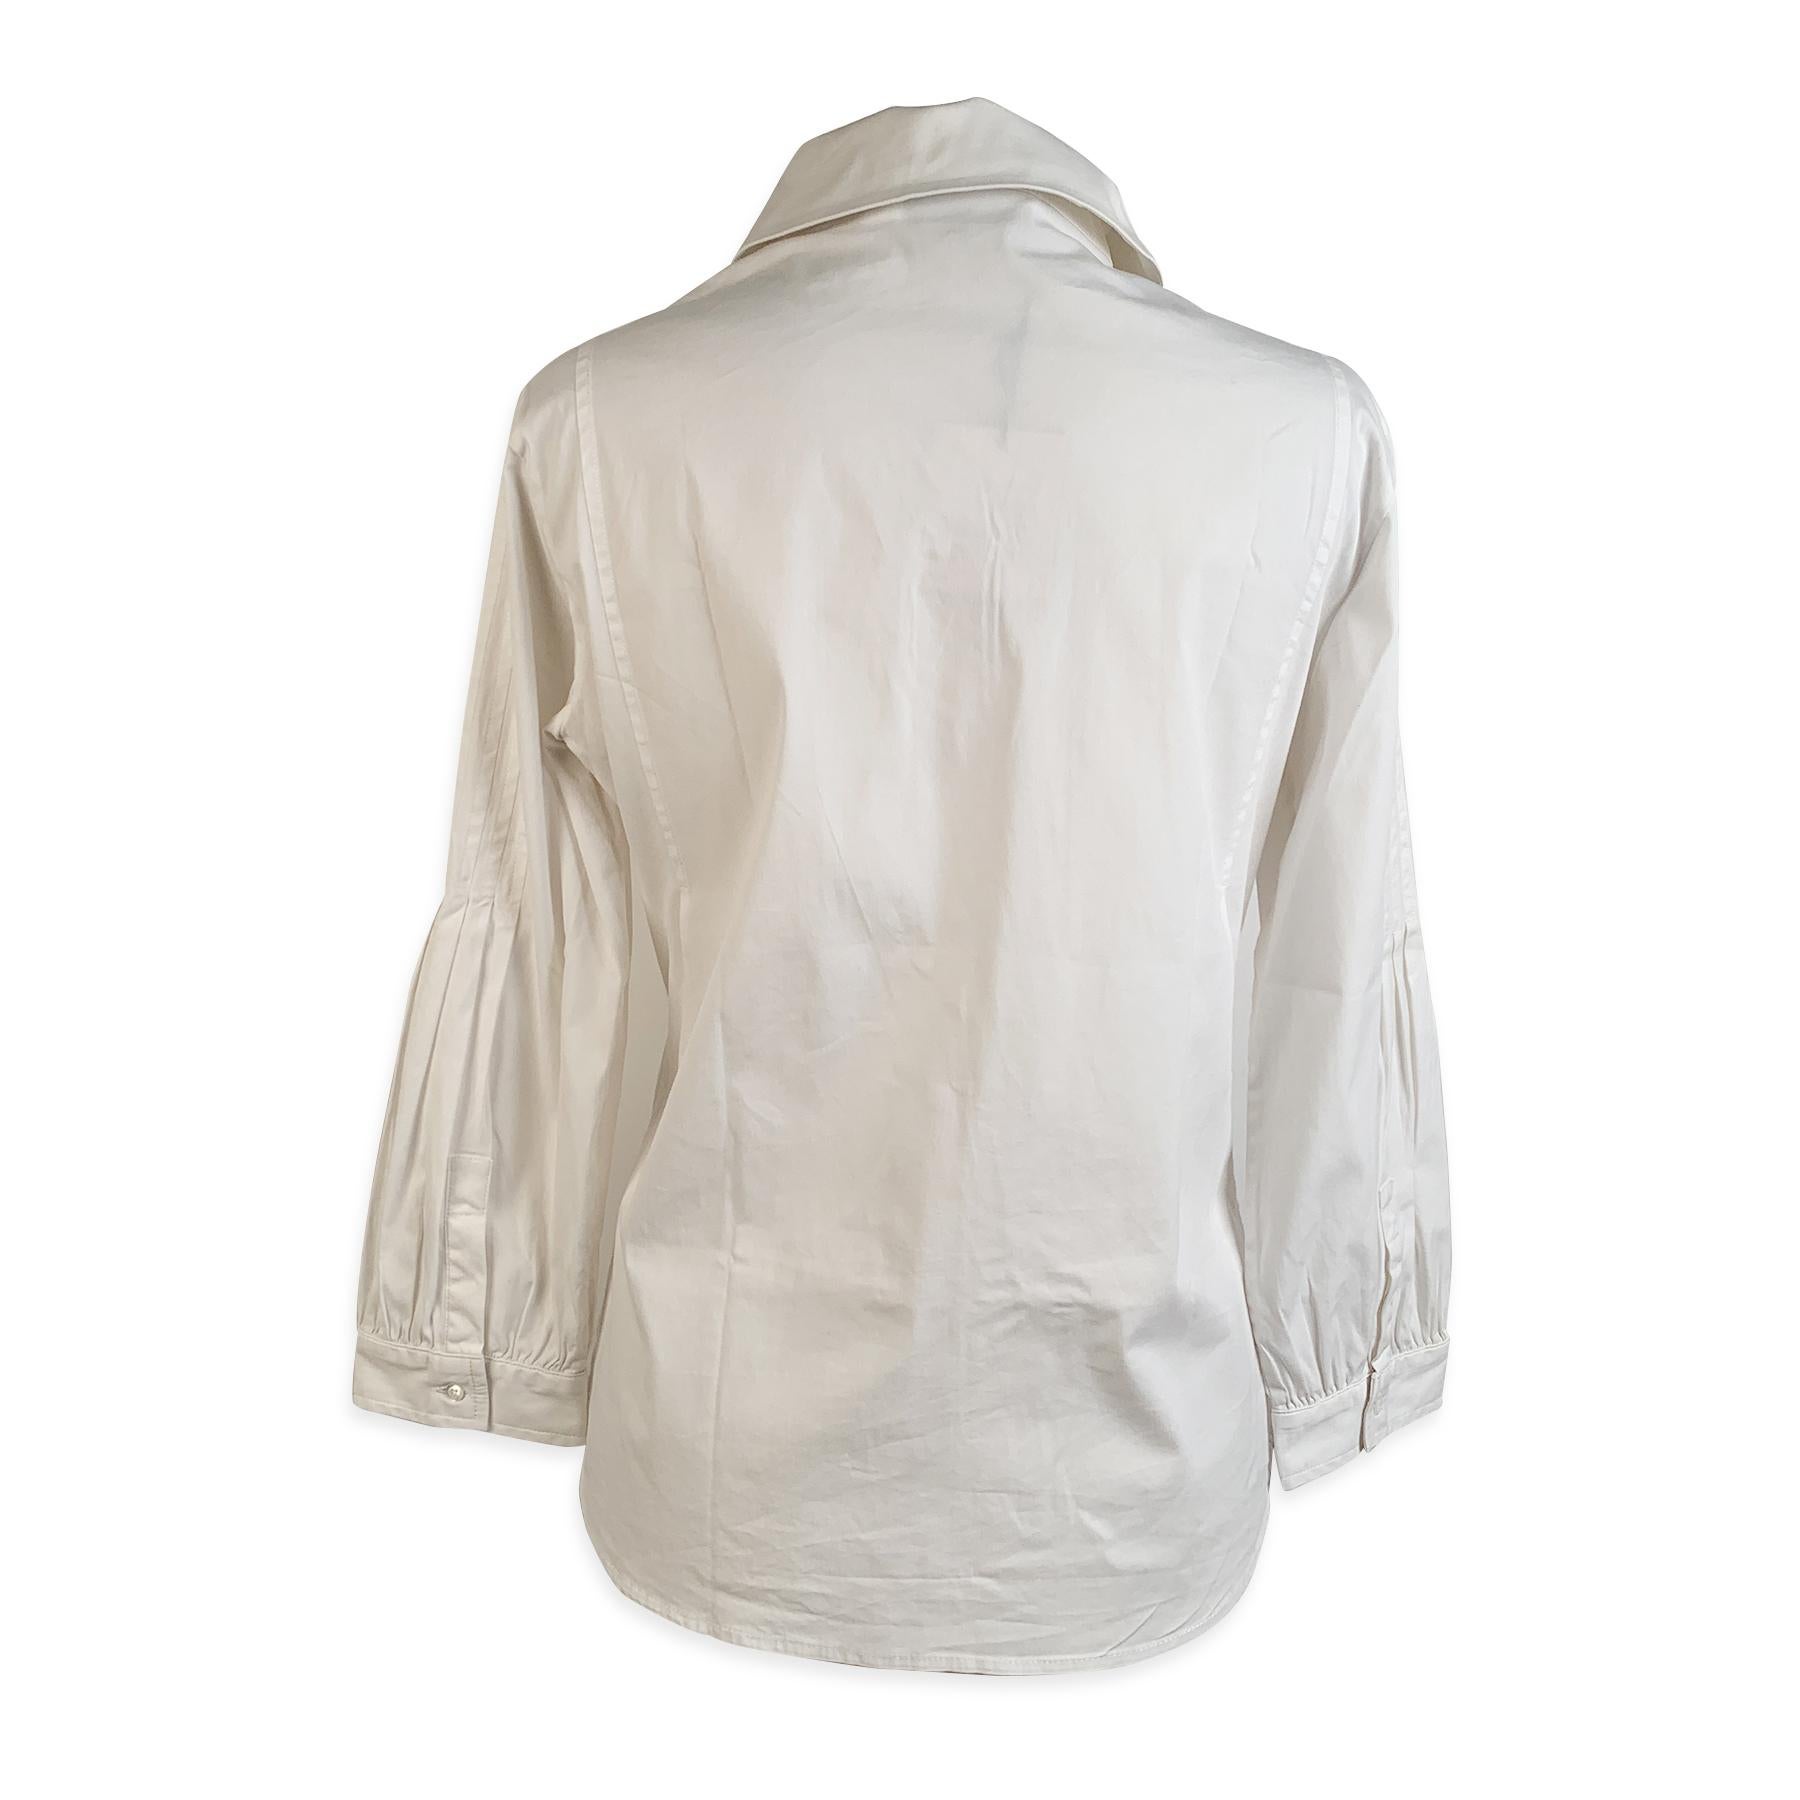 Christian Dior White Cotton Blend Button Down Shirt Size 44 2